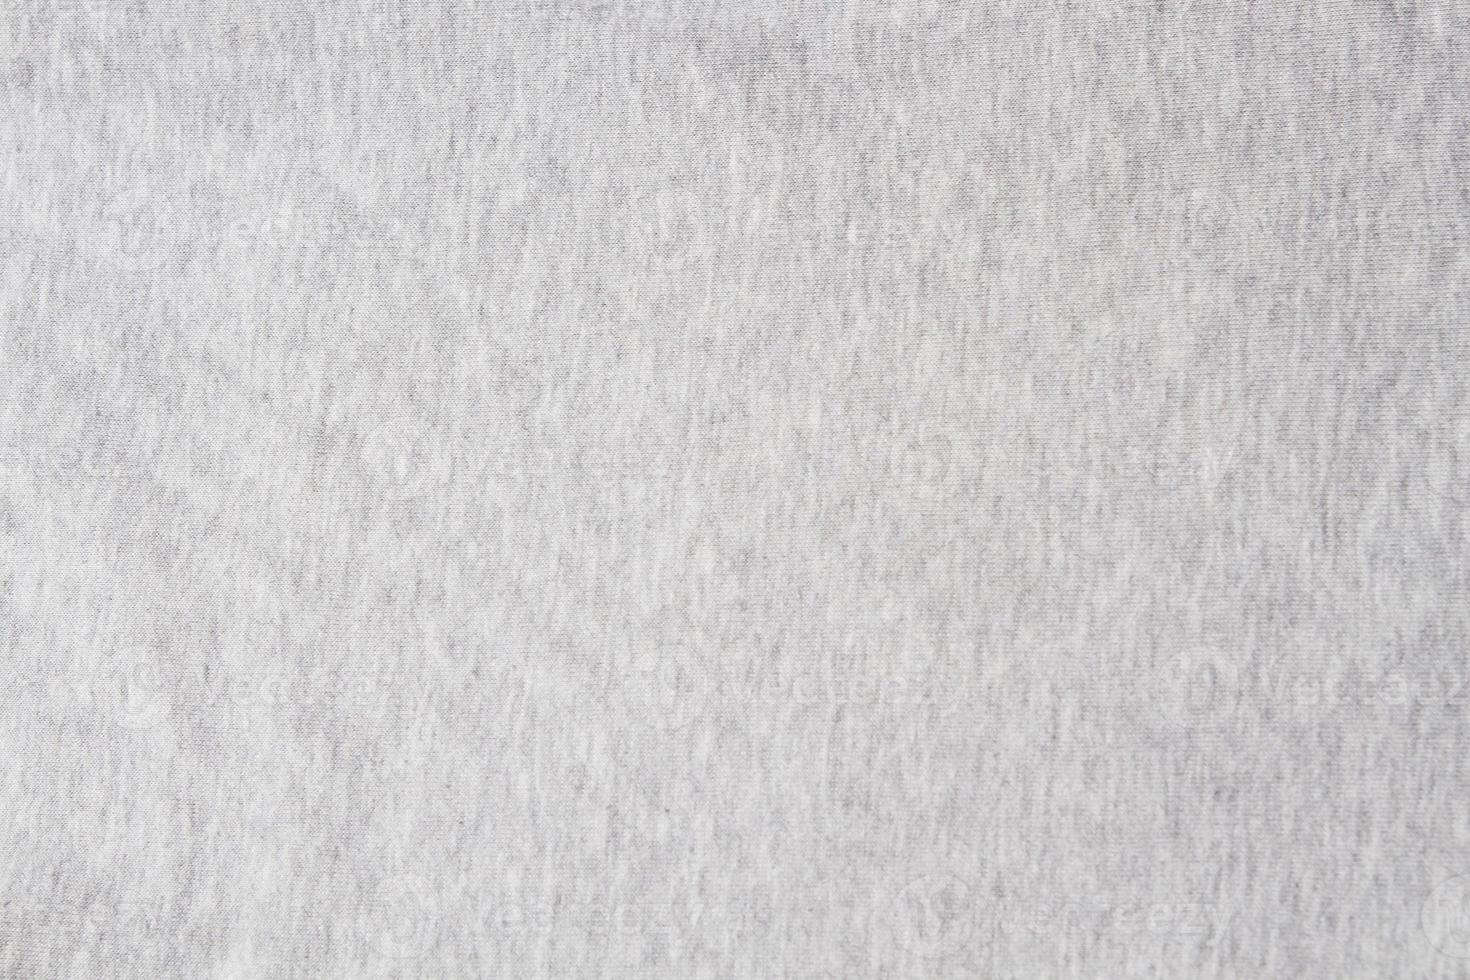 Fondo de textura de tela blanca abstracta. Fondo de textura de tela de organza blanca. lona tejida con motivos naturales foto